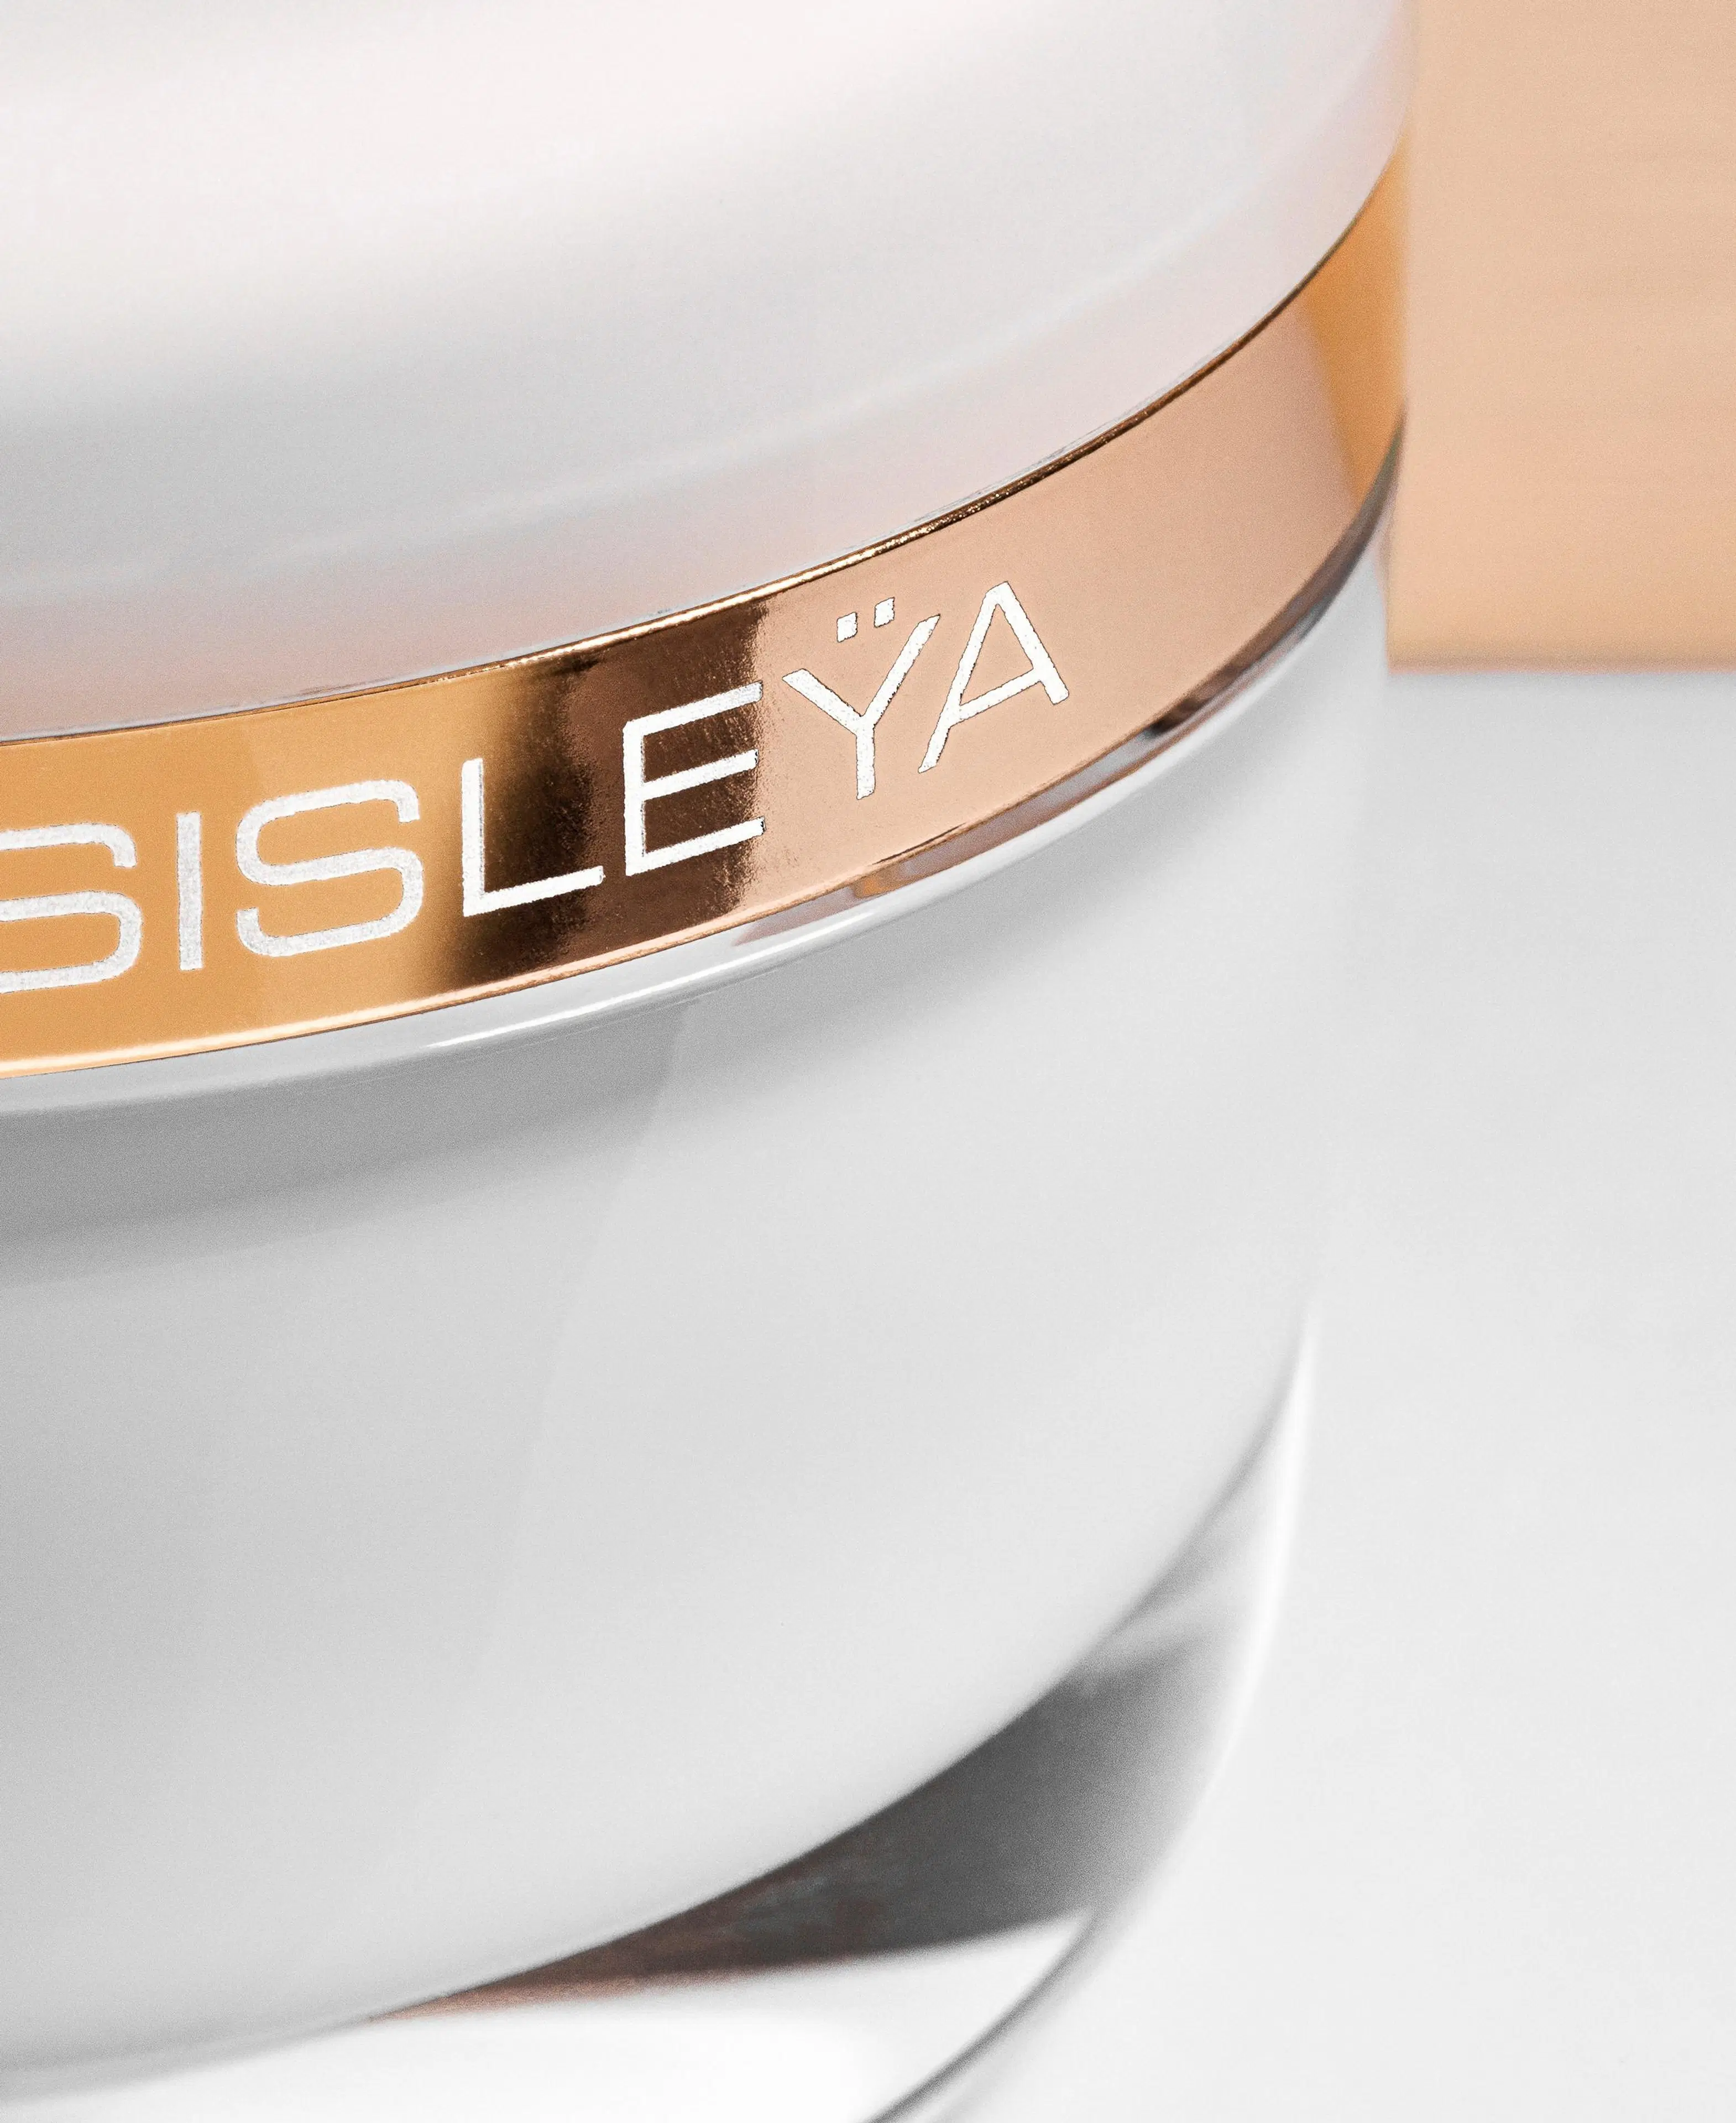 Sisley Sisleÿa l'Intégral Anti-Age Extra-Rich hoitovoide 50 ml